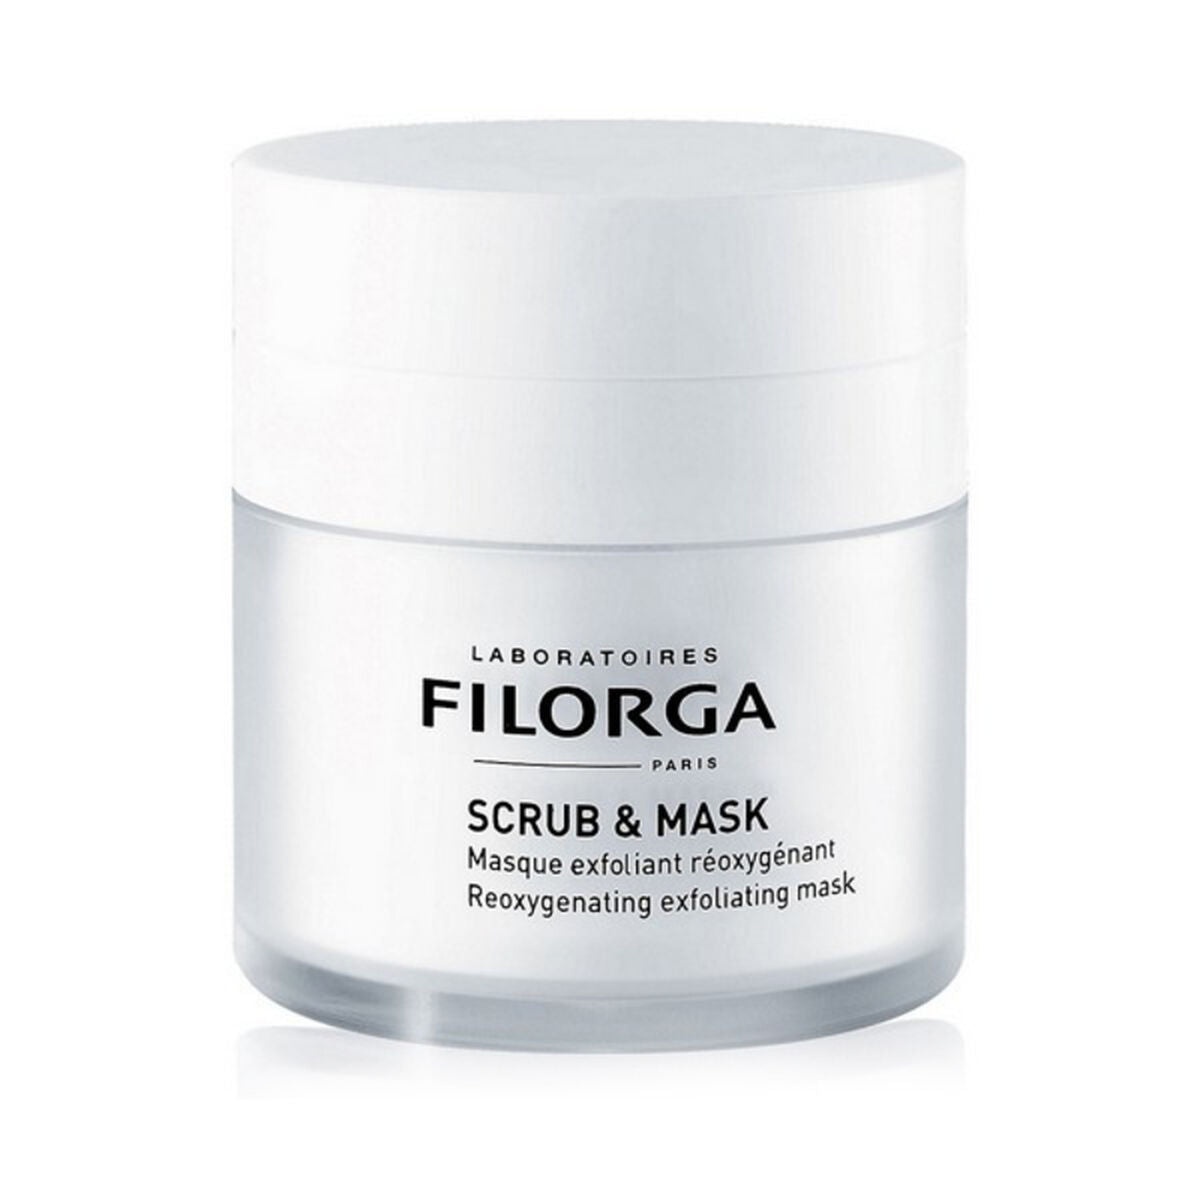 Eksfolierende Maske Reoxygenating Filorga (55 ml)